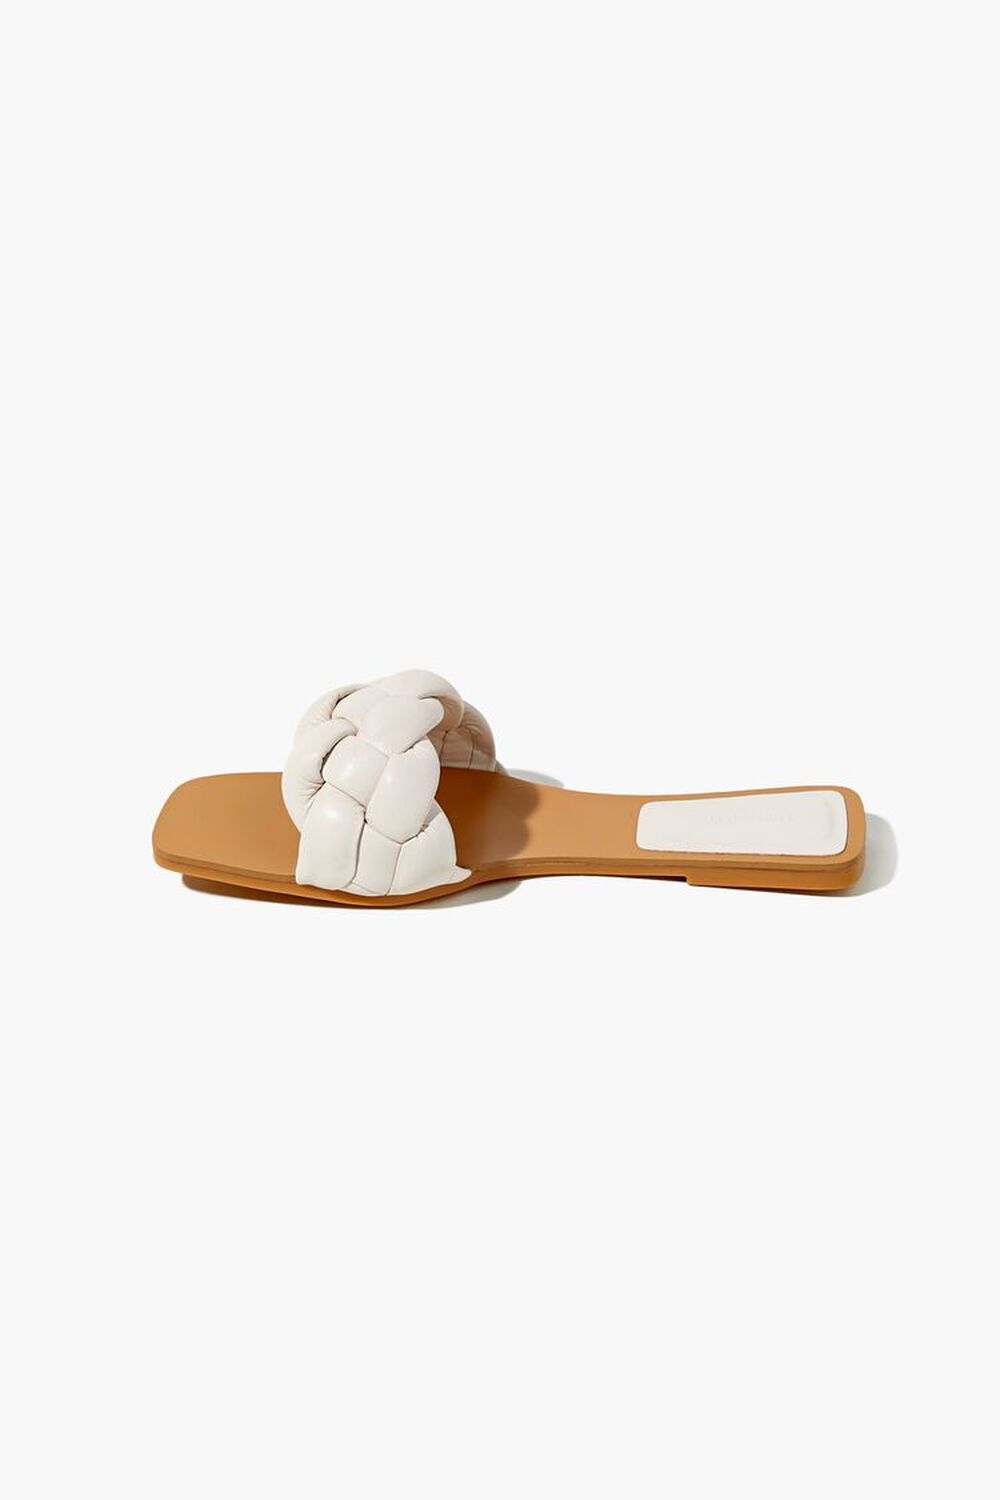 Braided Slip-On Sandals, image 2